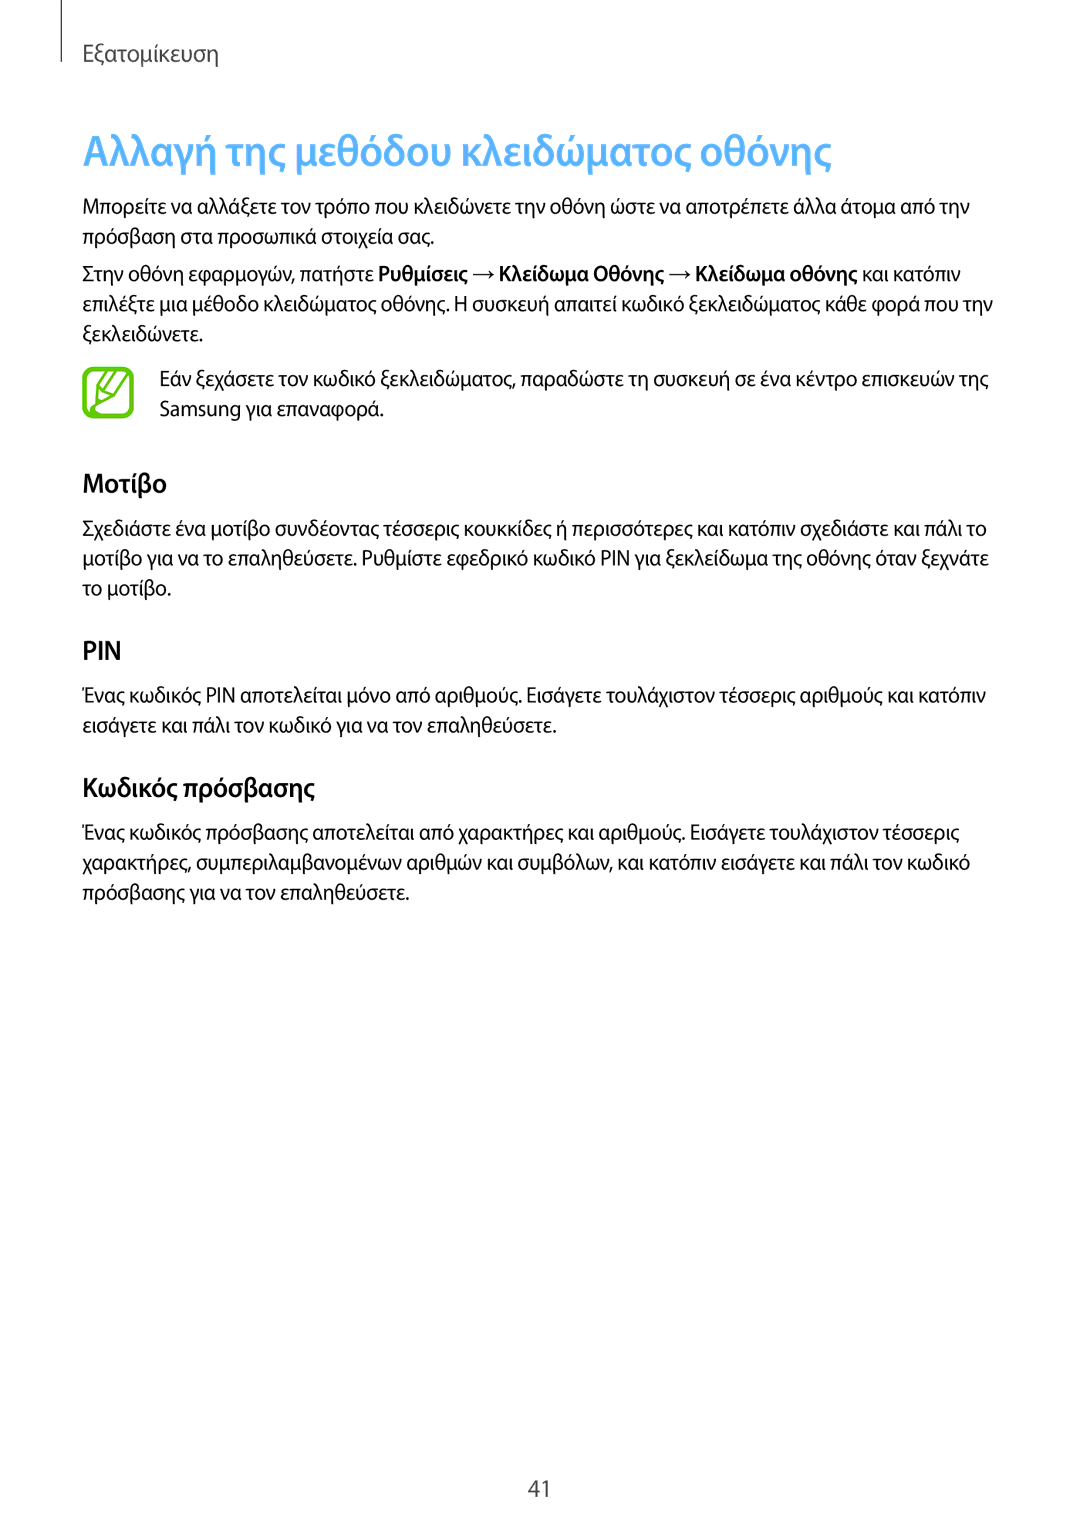 Samsung SM-T561NZKAEUR, SM-T561NZWAEUR manual Αλλαγή της μεθόδου κλειδώματος οθόνης, Μοτίβο, Κωδικός πρόσβασης 